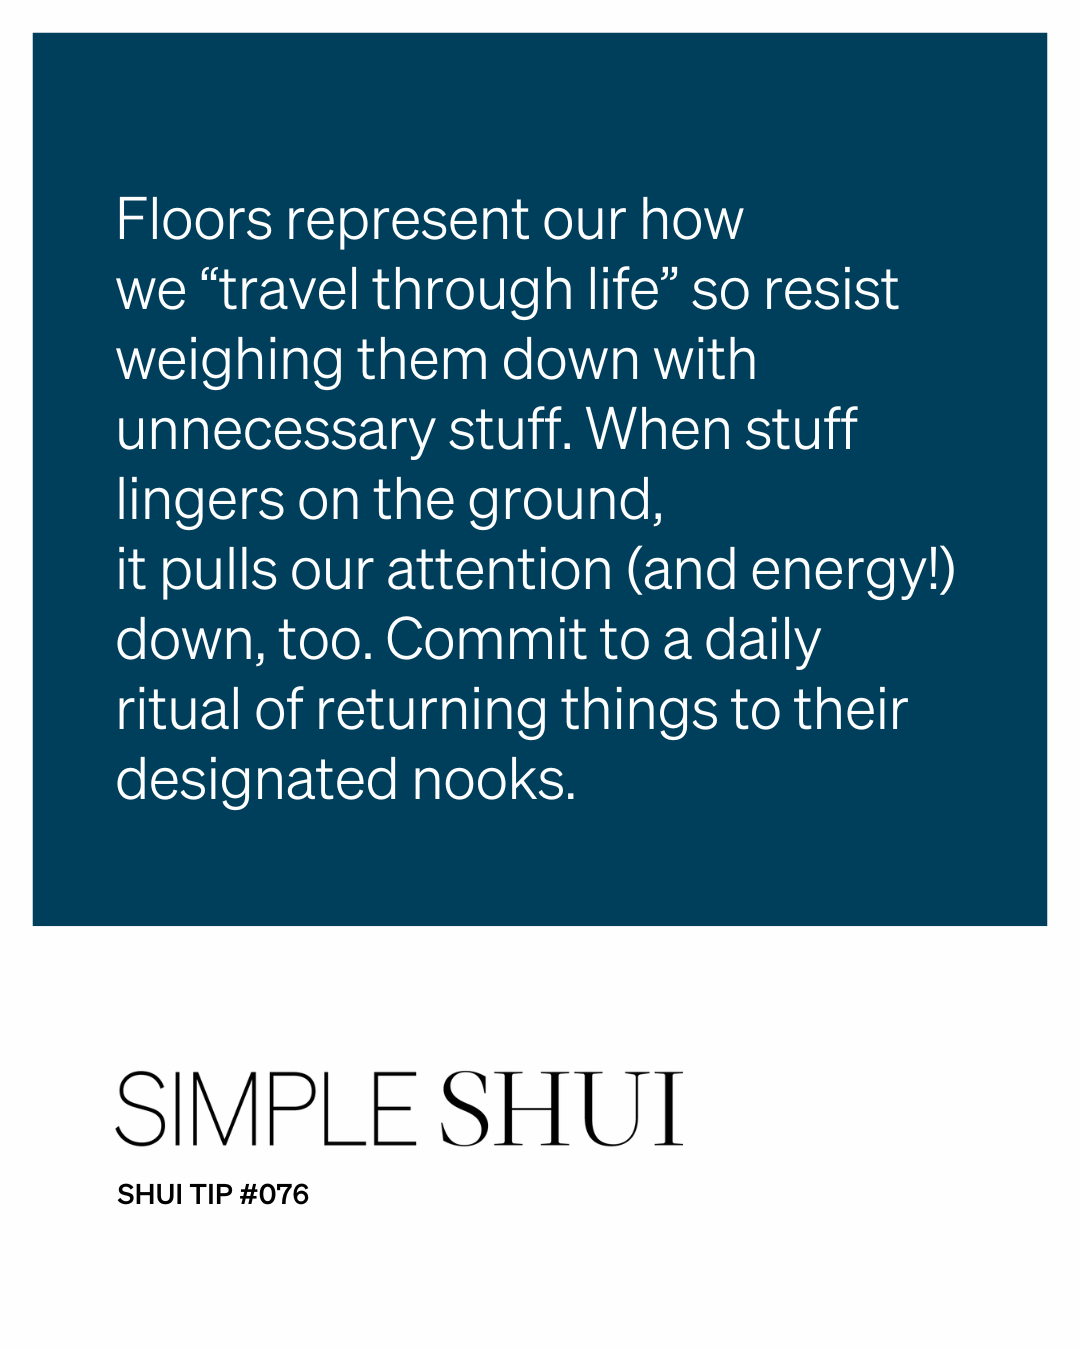 simple shui tip: flourish at home!